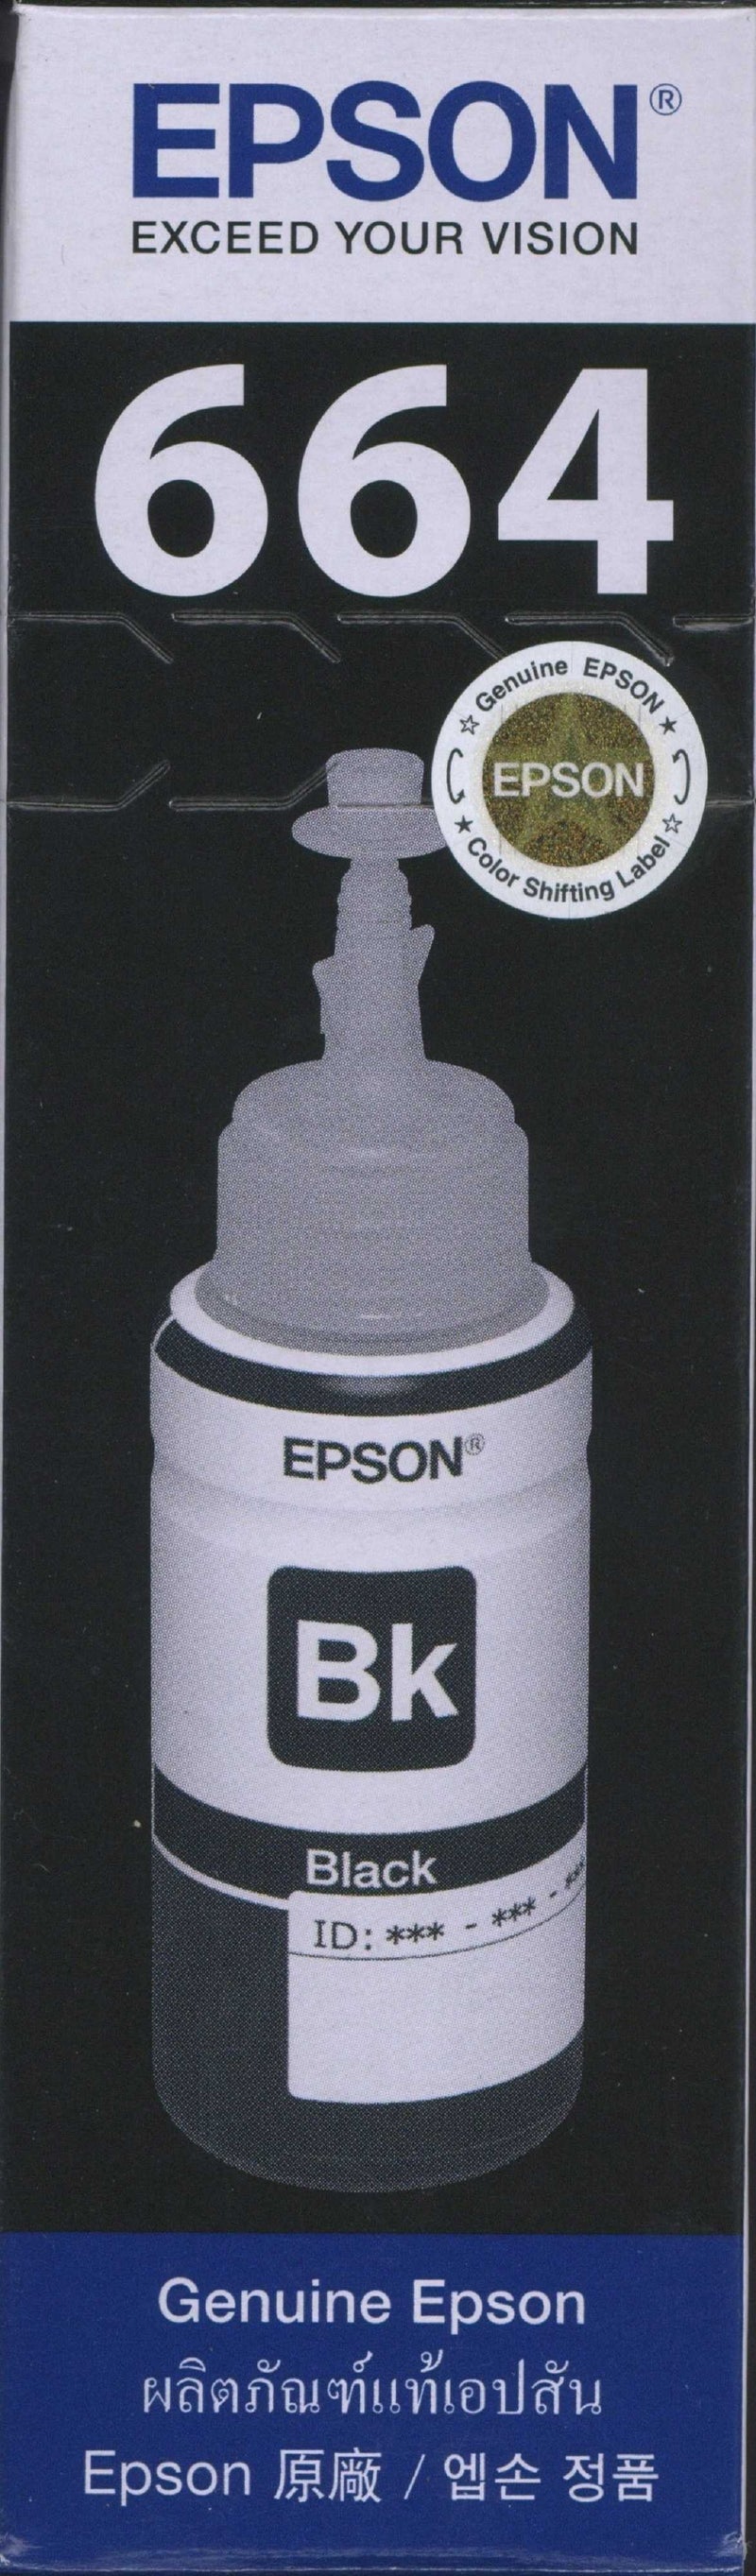 EPSON T664 Black Ink